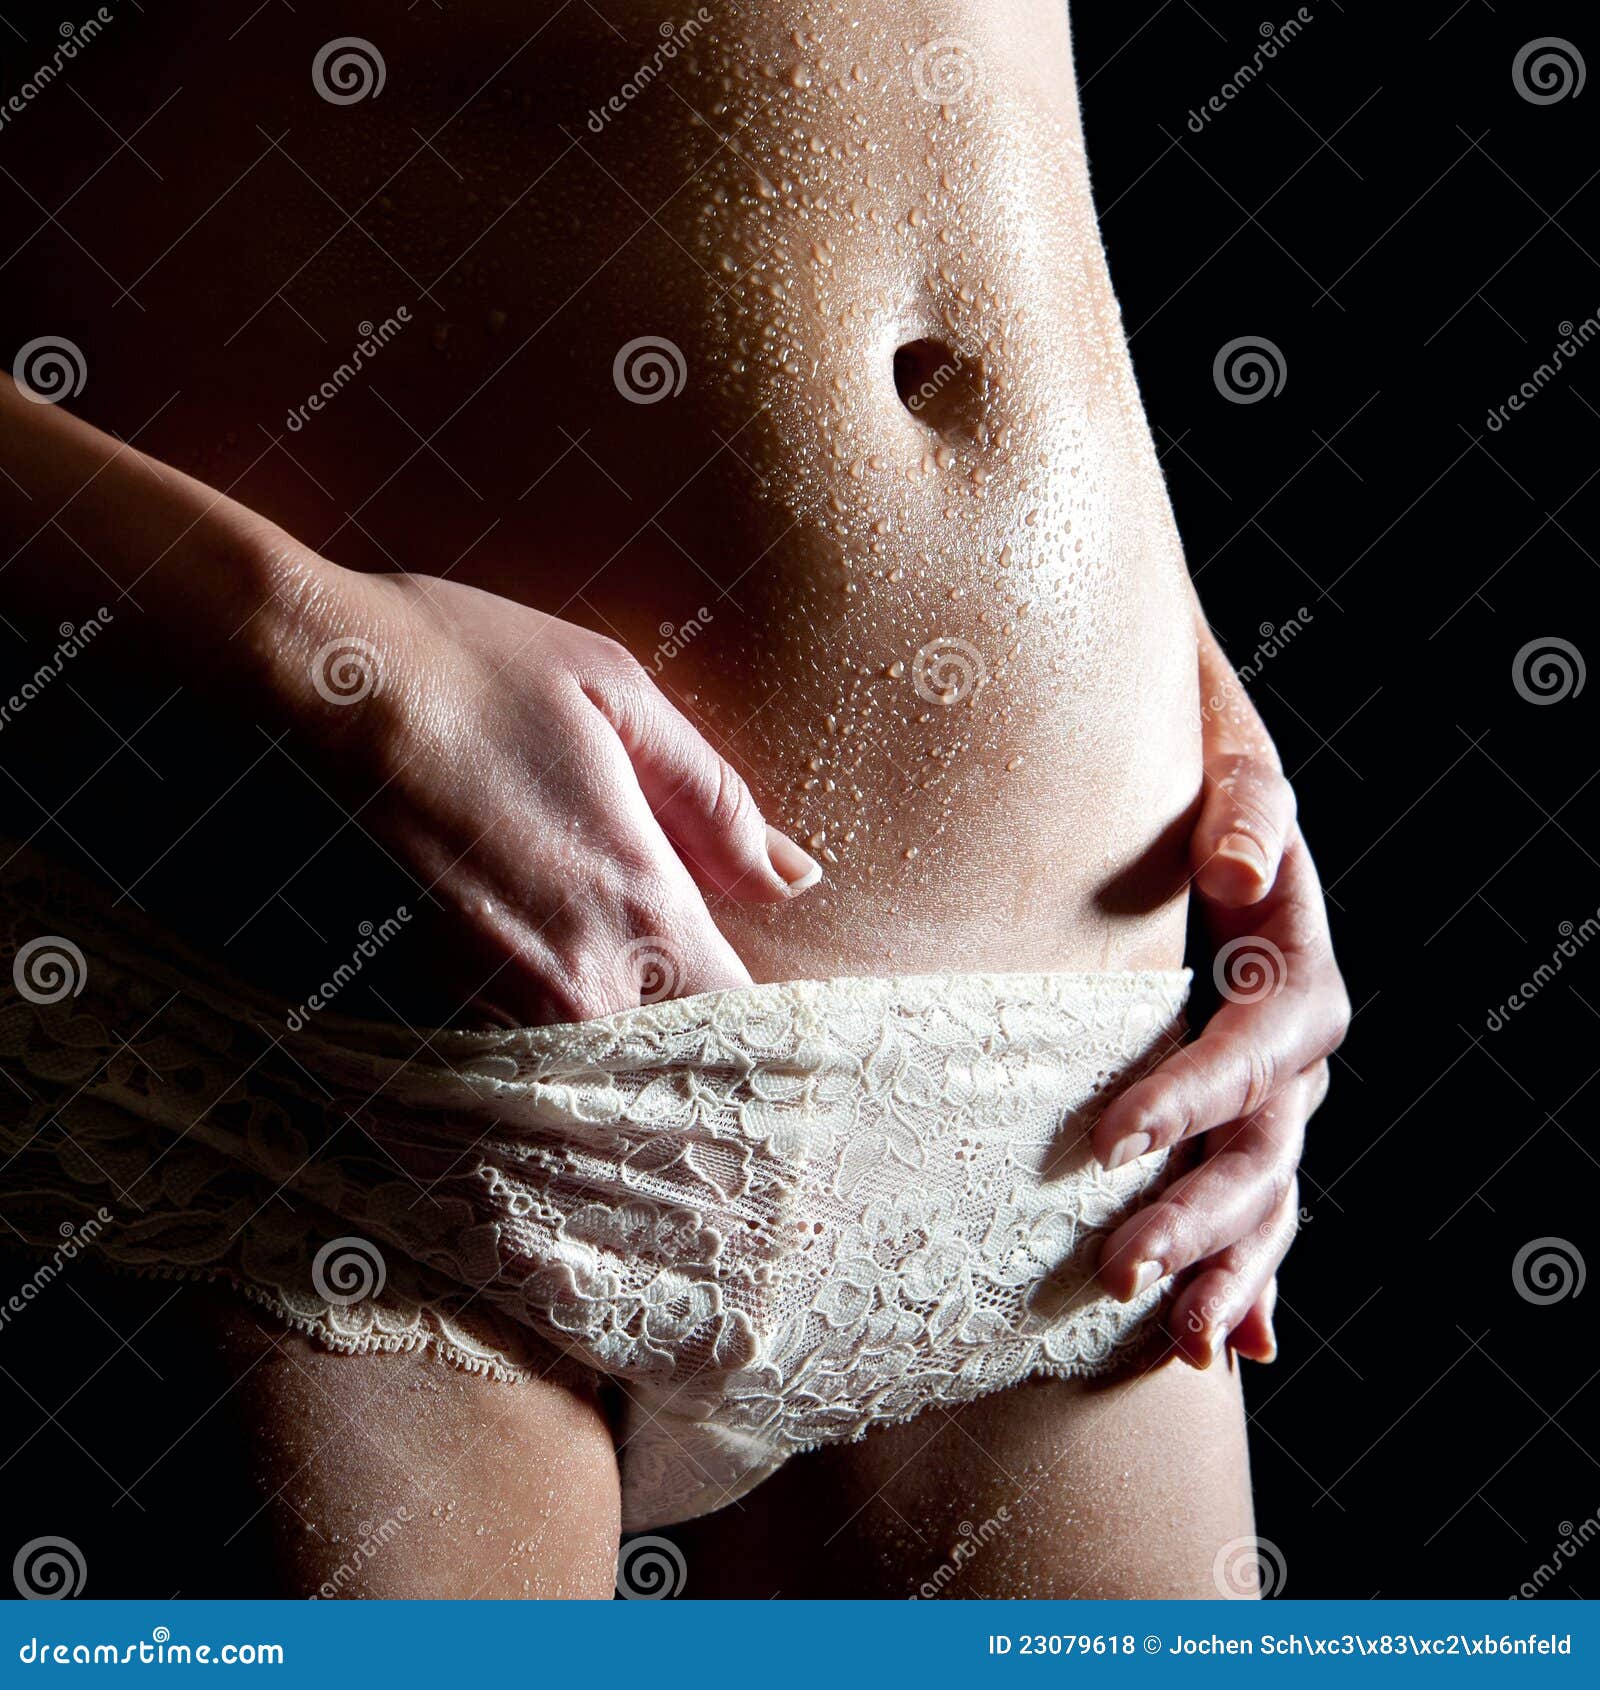 betty thornhill add photo women in wet panties